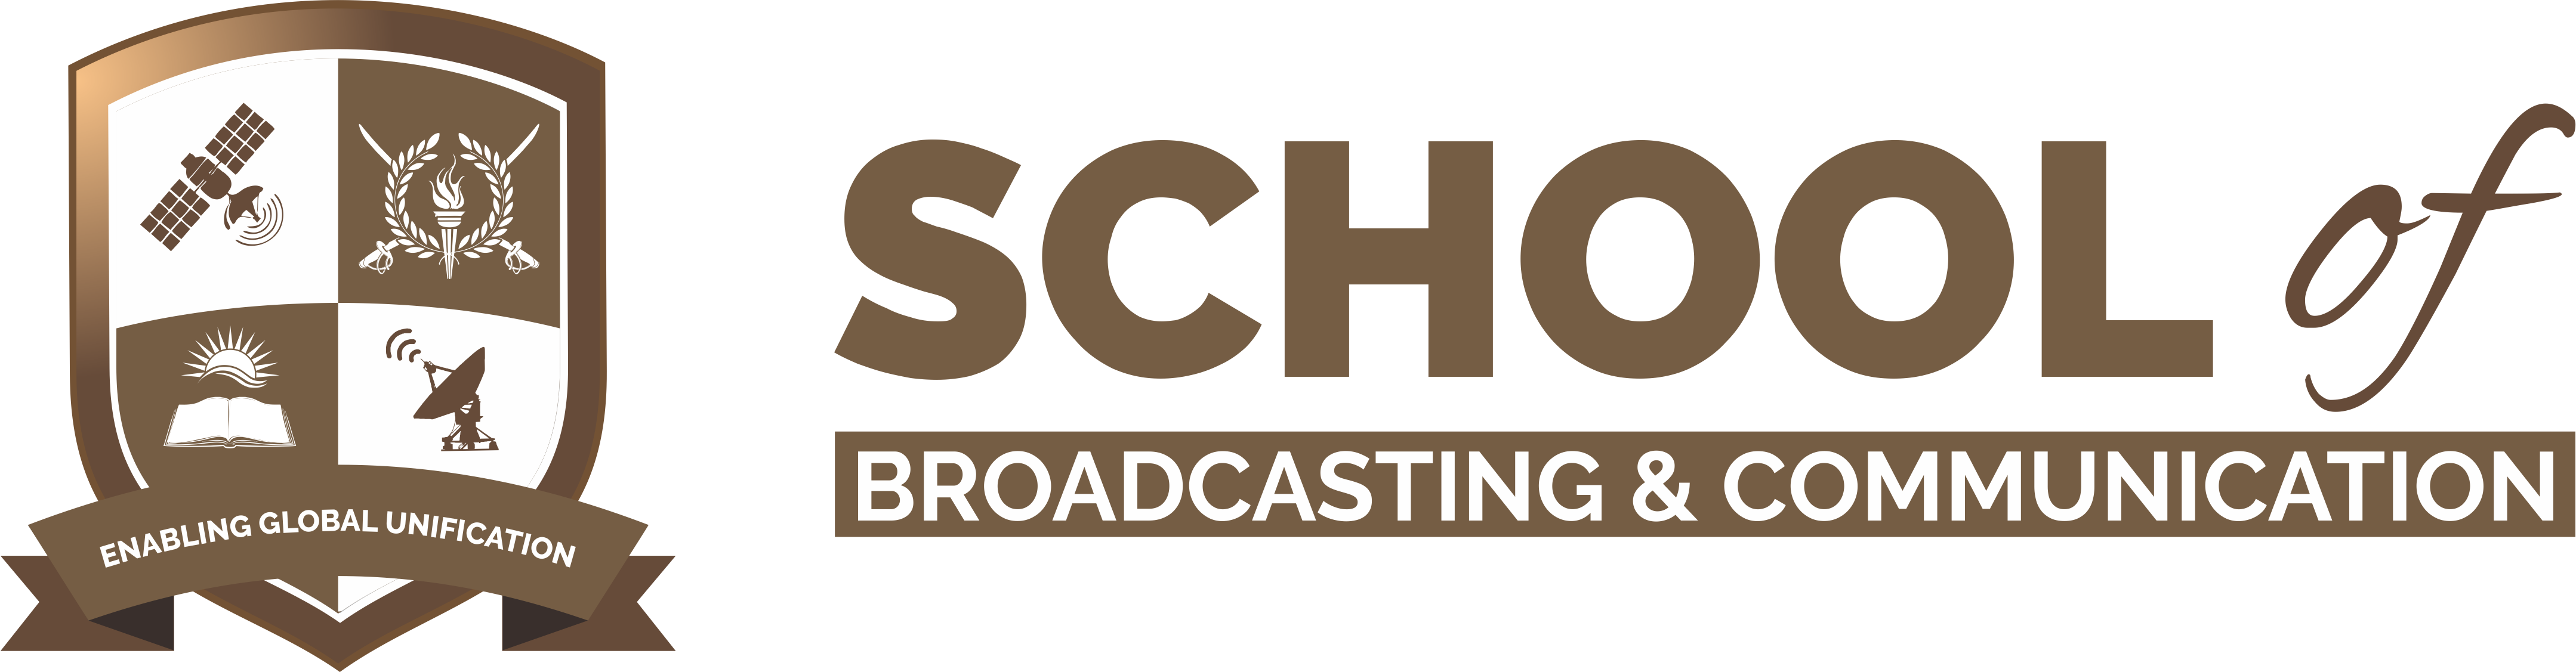 School Of Broadcasting & Communication - School Of Broadcasting And Communication (4317x1127), Png Download